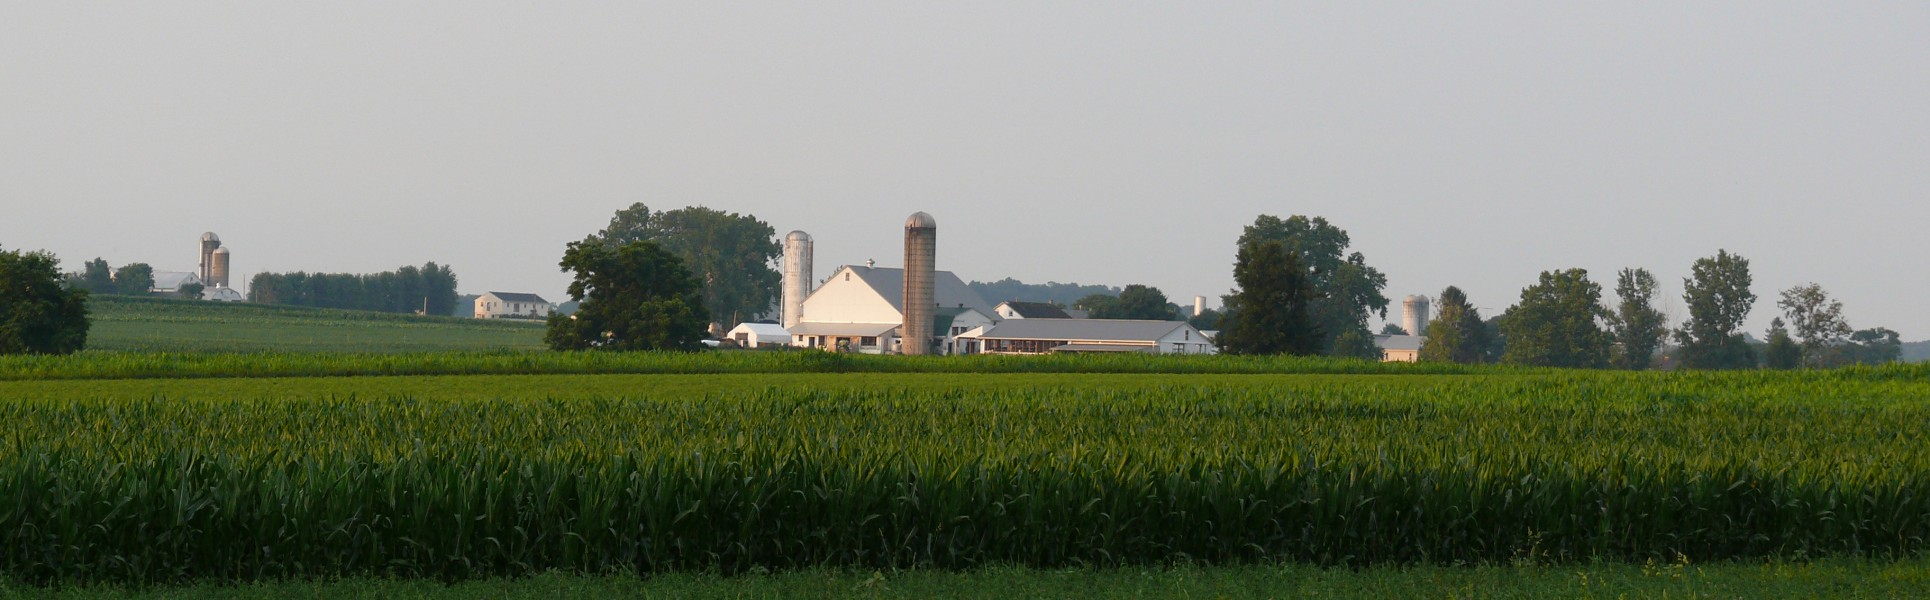 Amish dairy farms 2